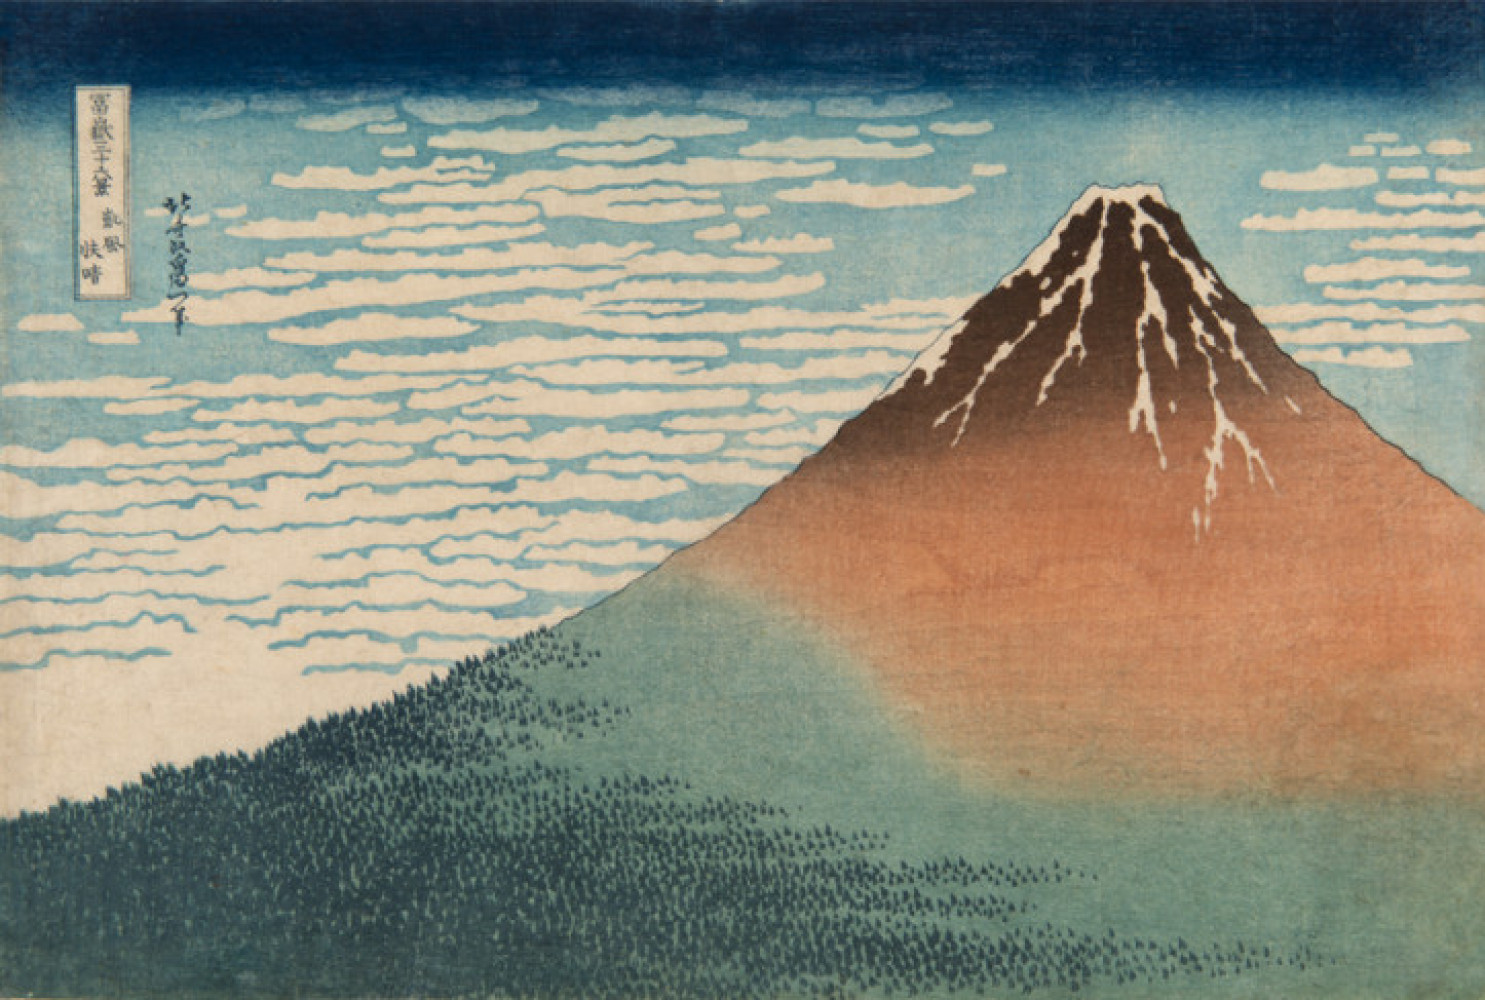 KATSUSHIKA HOKUSAI (1760-1849) South Wind, Clear Dawn (Red Fuji) from the seires Thirty-six Views of Fuji, ca. 1831-33. Color woodblock print, 10 1/8 x 15 inches.